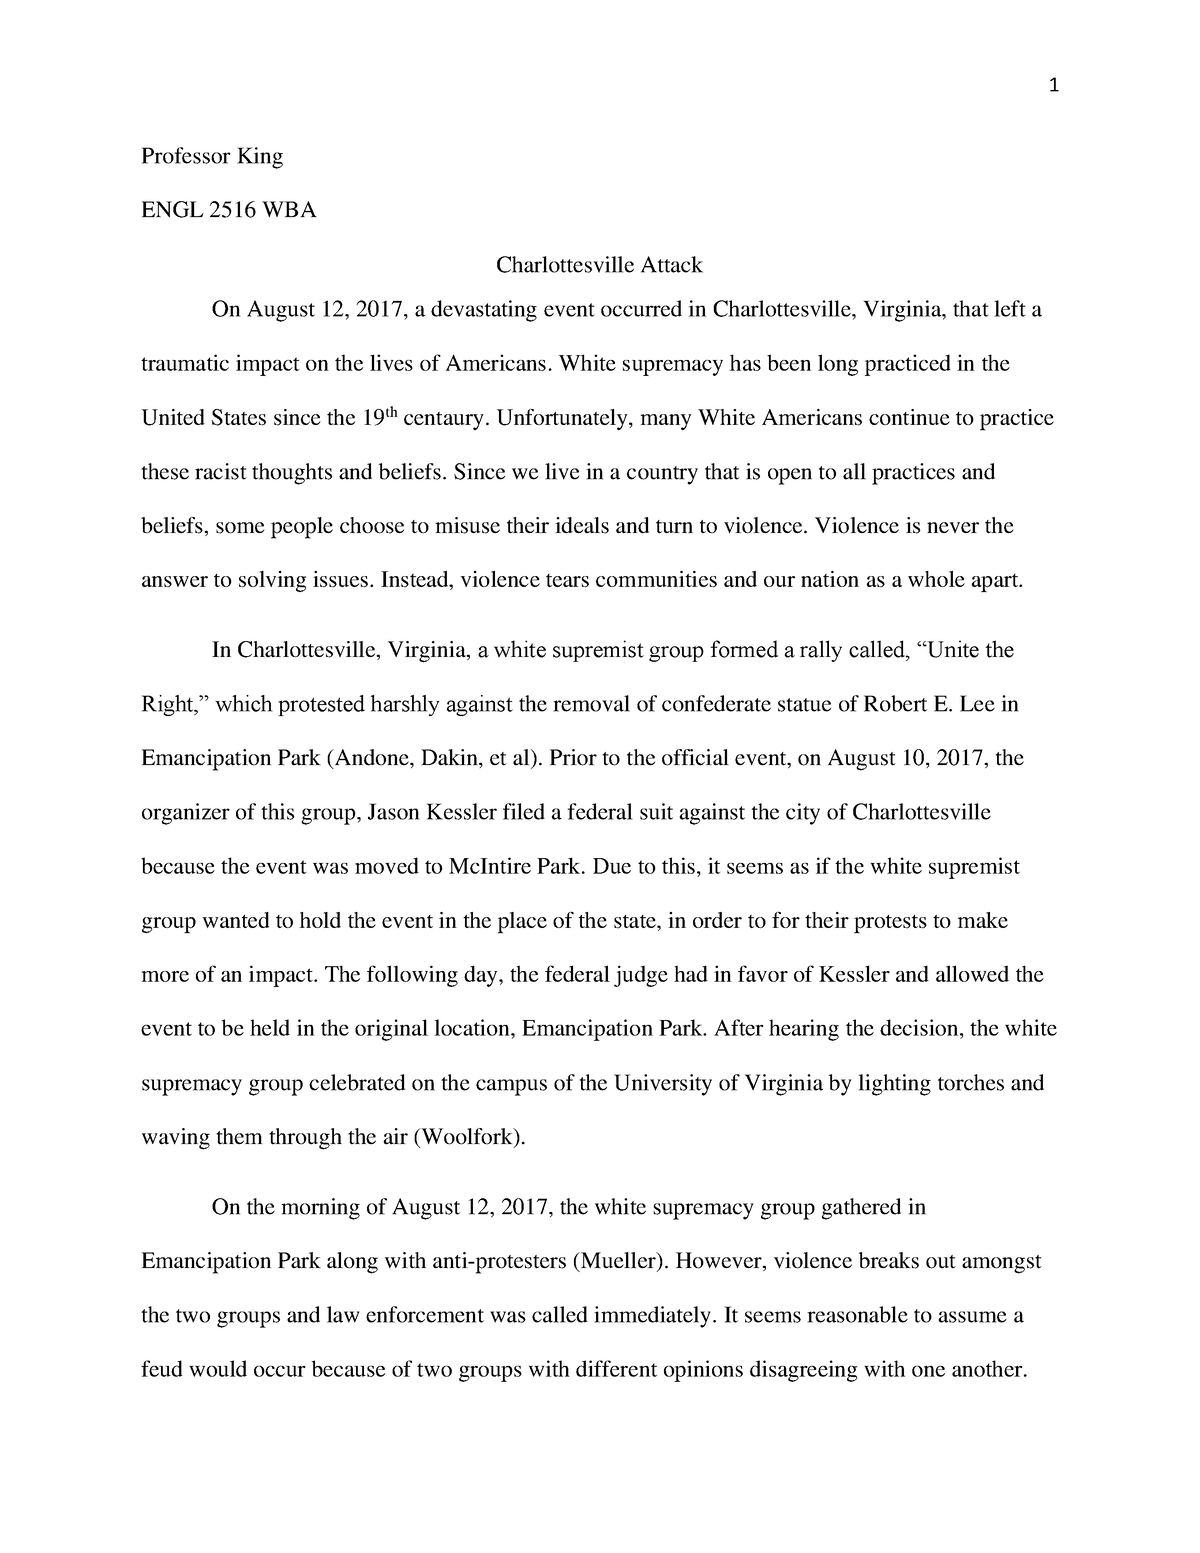 Charlottesville Attack Essay Professor King ENGL 2516 WBA